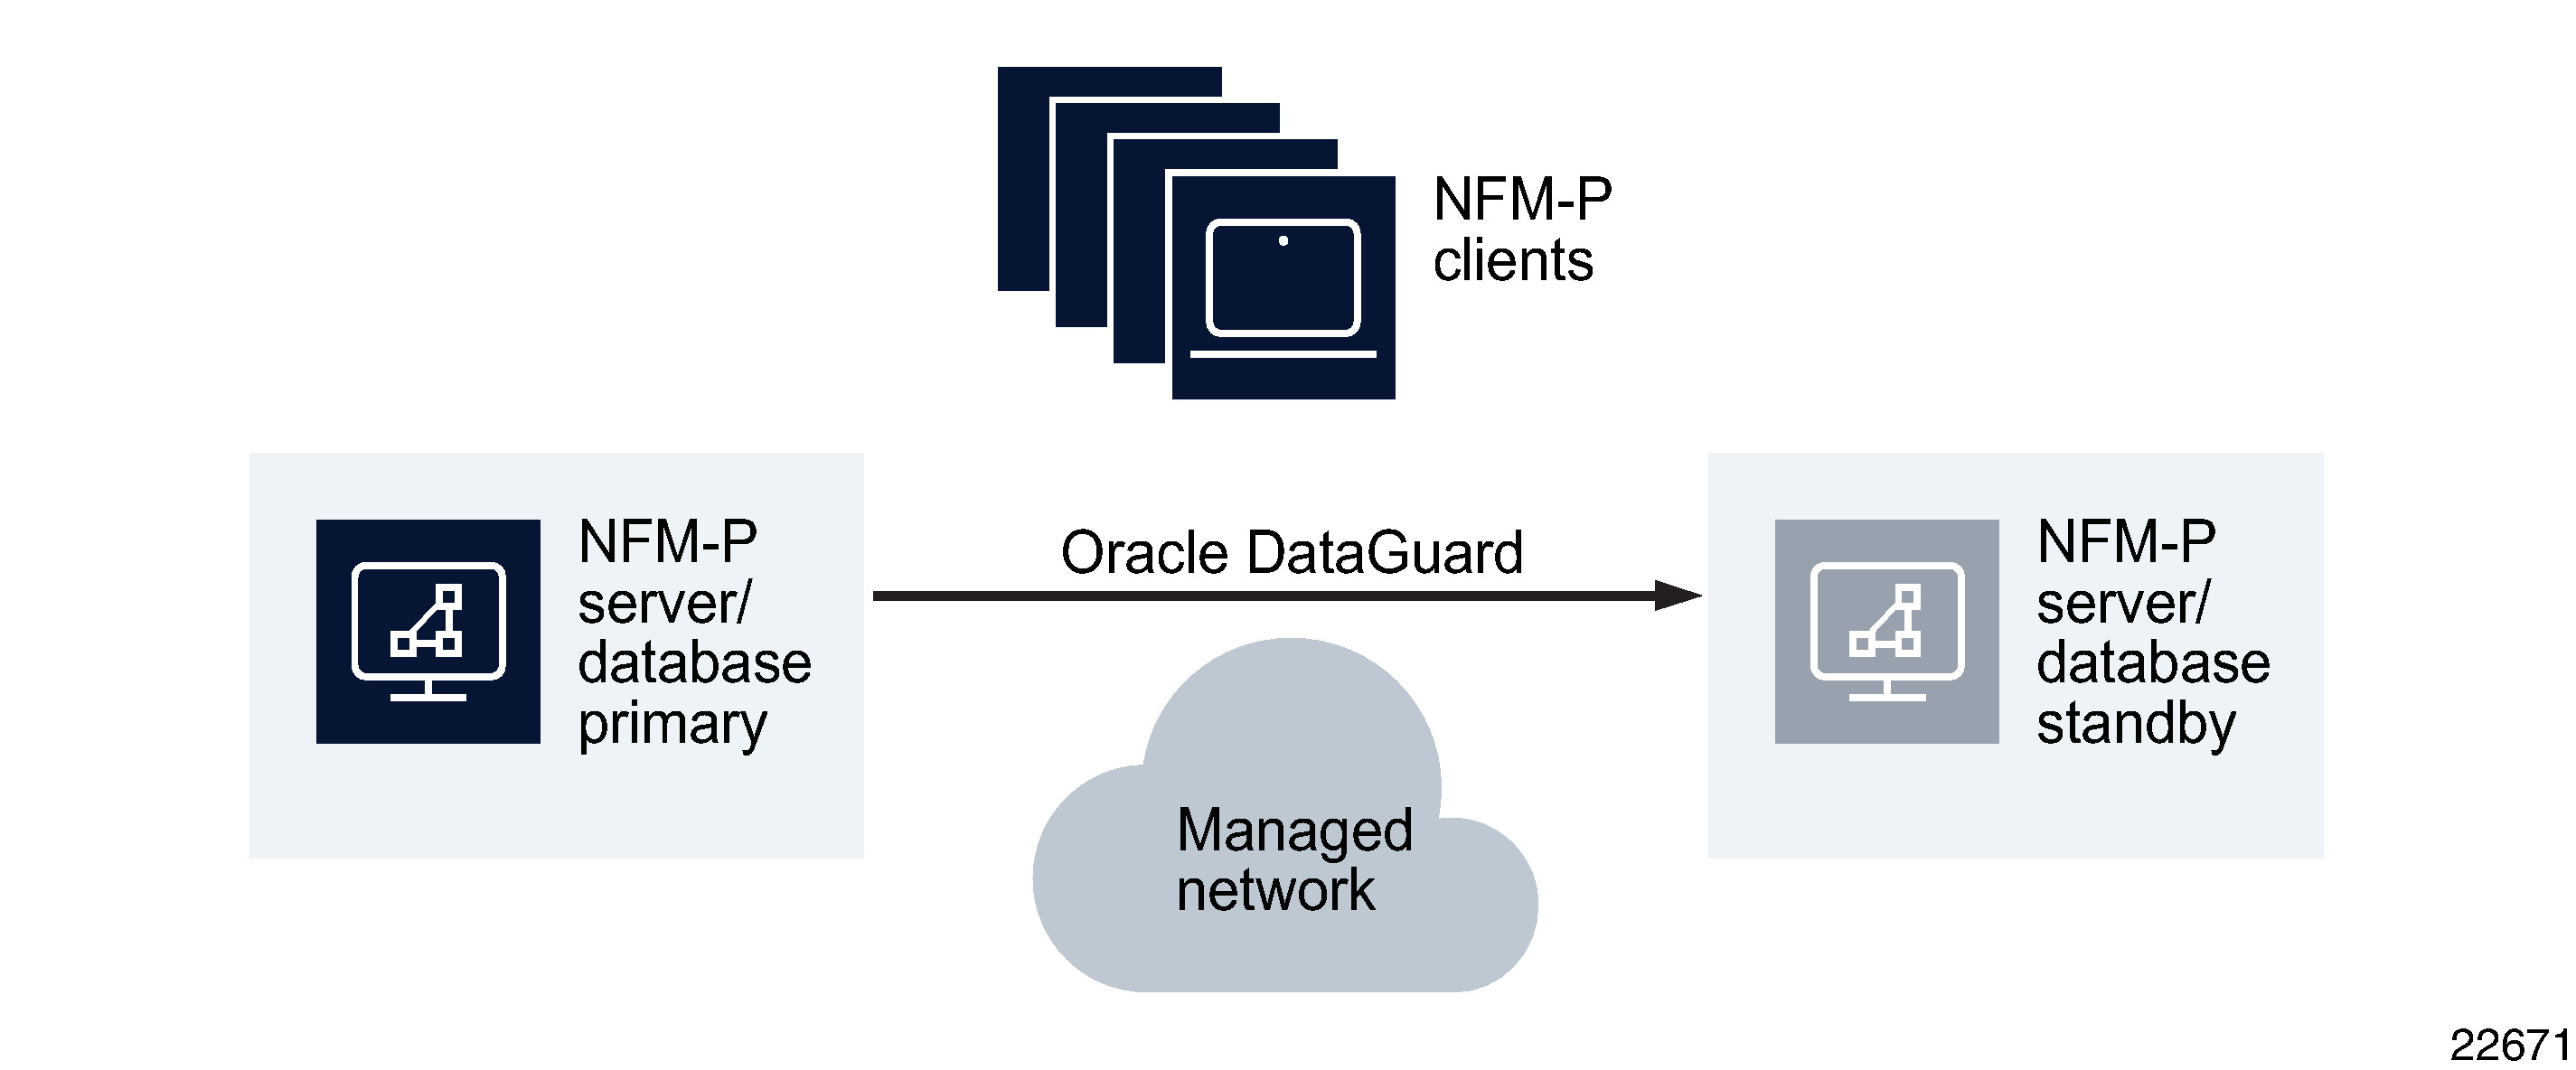 NFM-P collocated server/database redundancy deployment